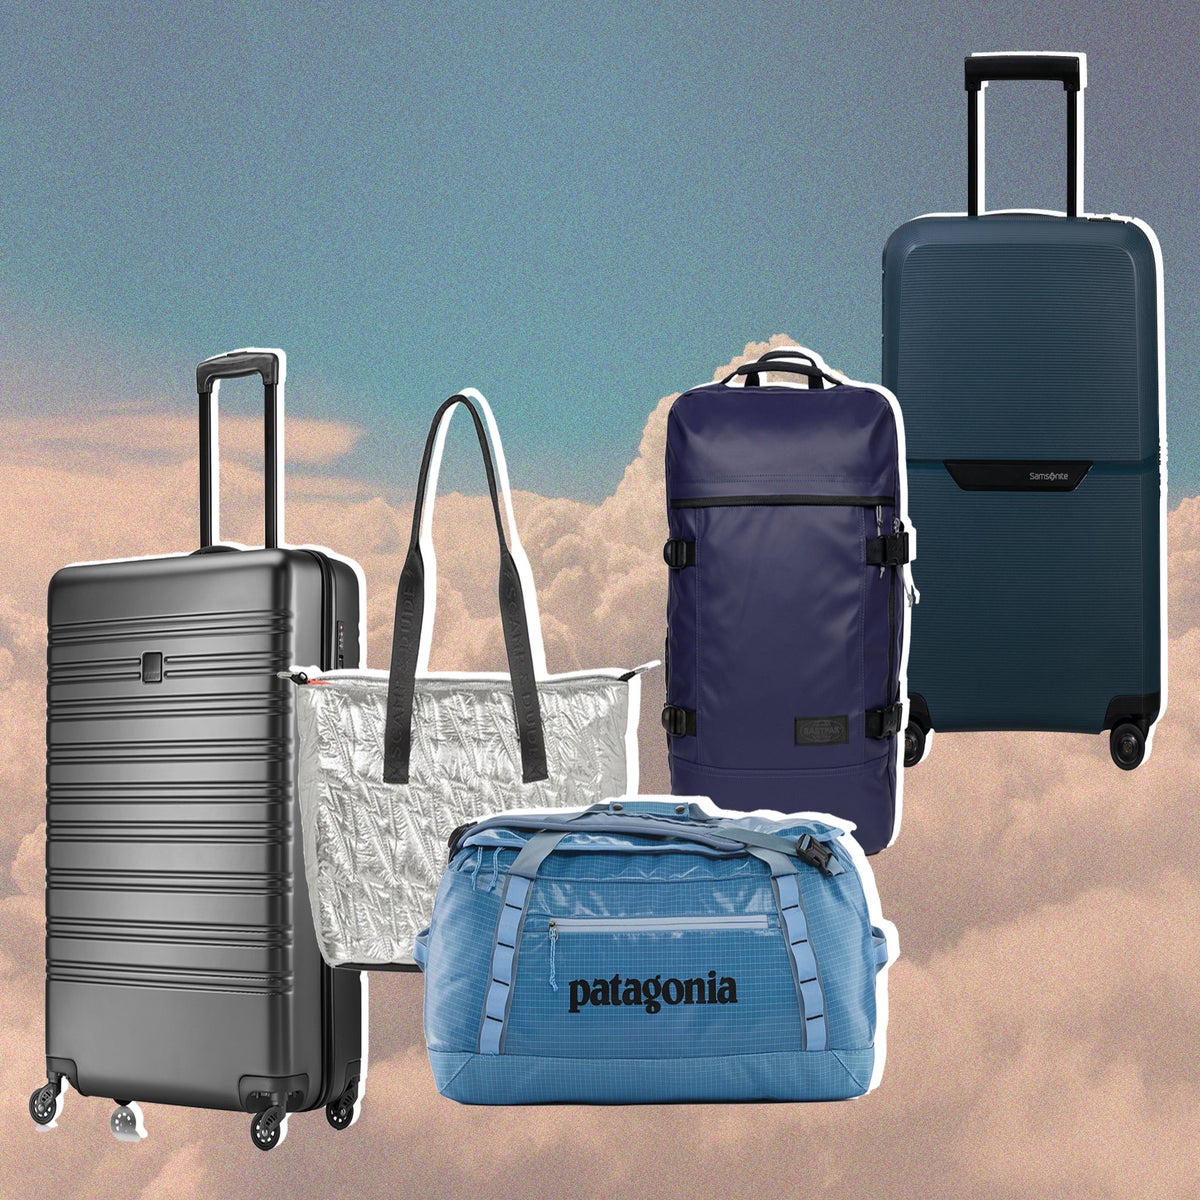 15 Cabin luggage ideas  luggage, cabin luggage, bags